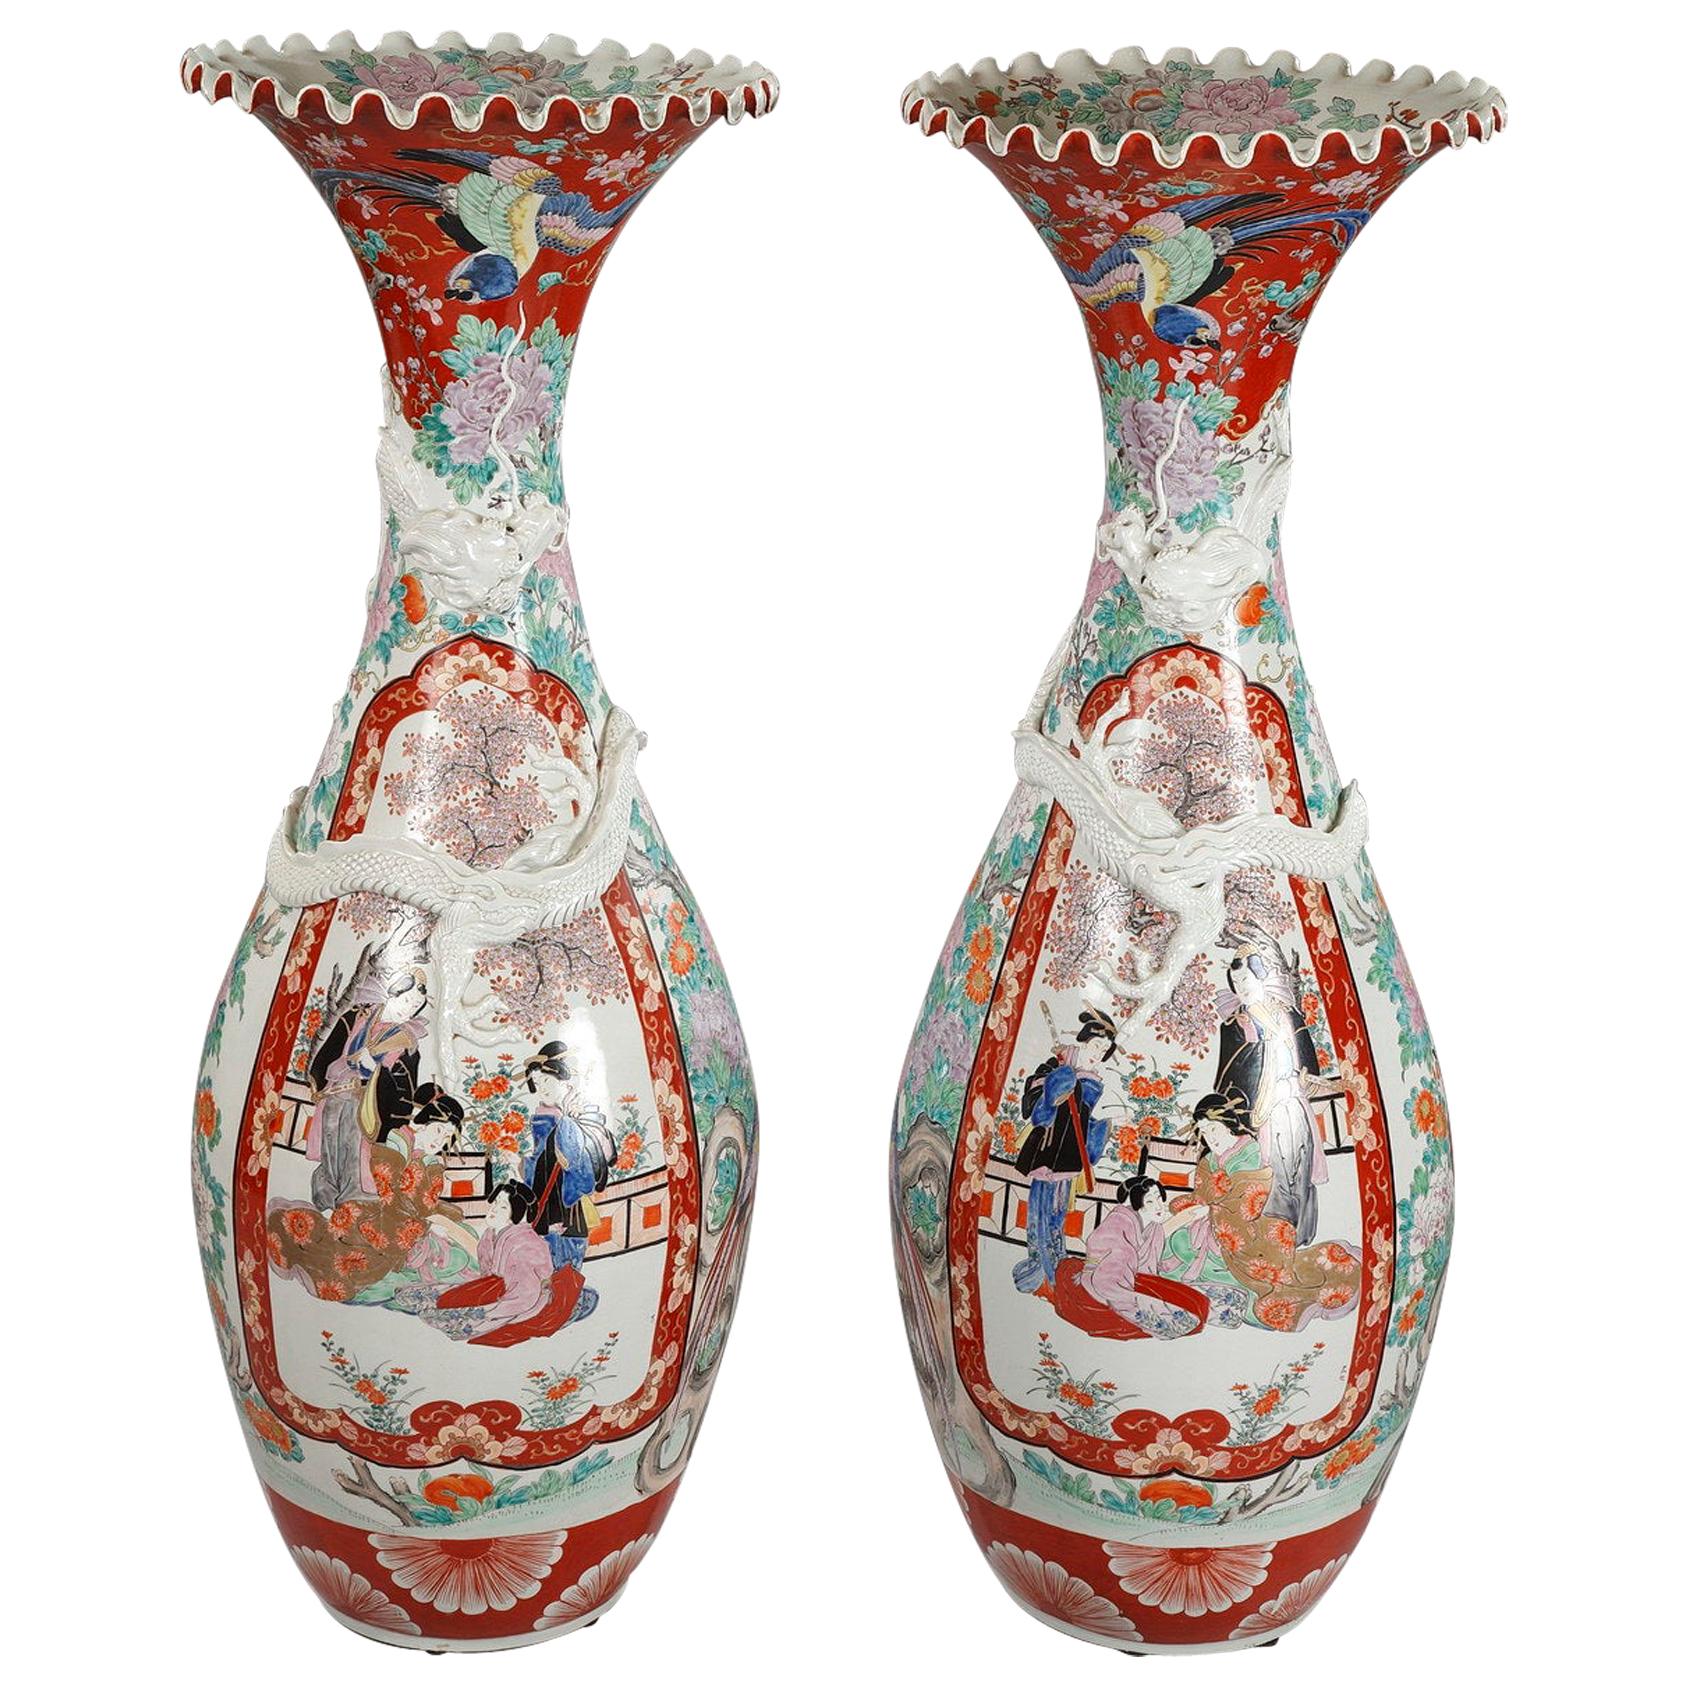 Pair of Large Imari Porcelain Vases, Japan, Late 19th Century